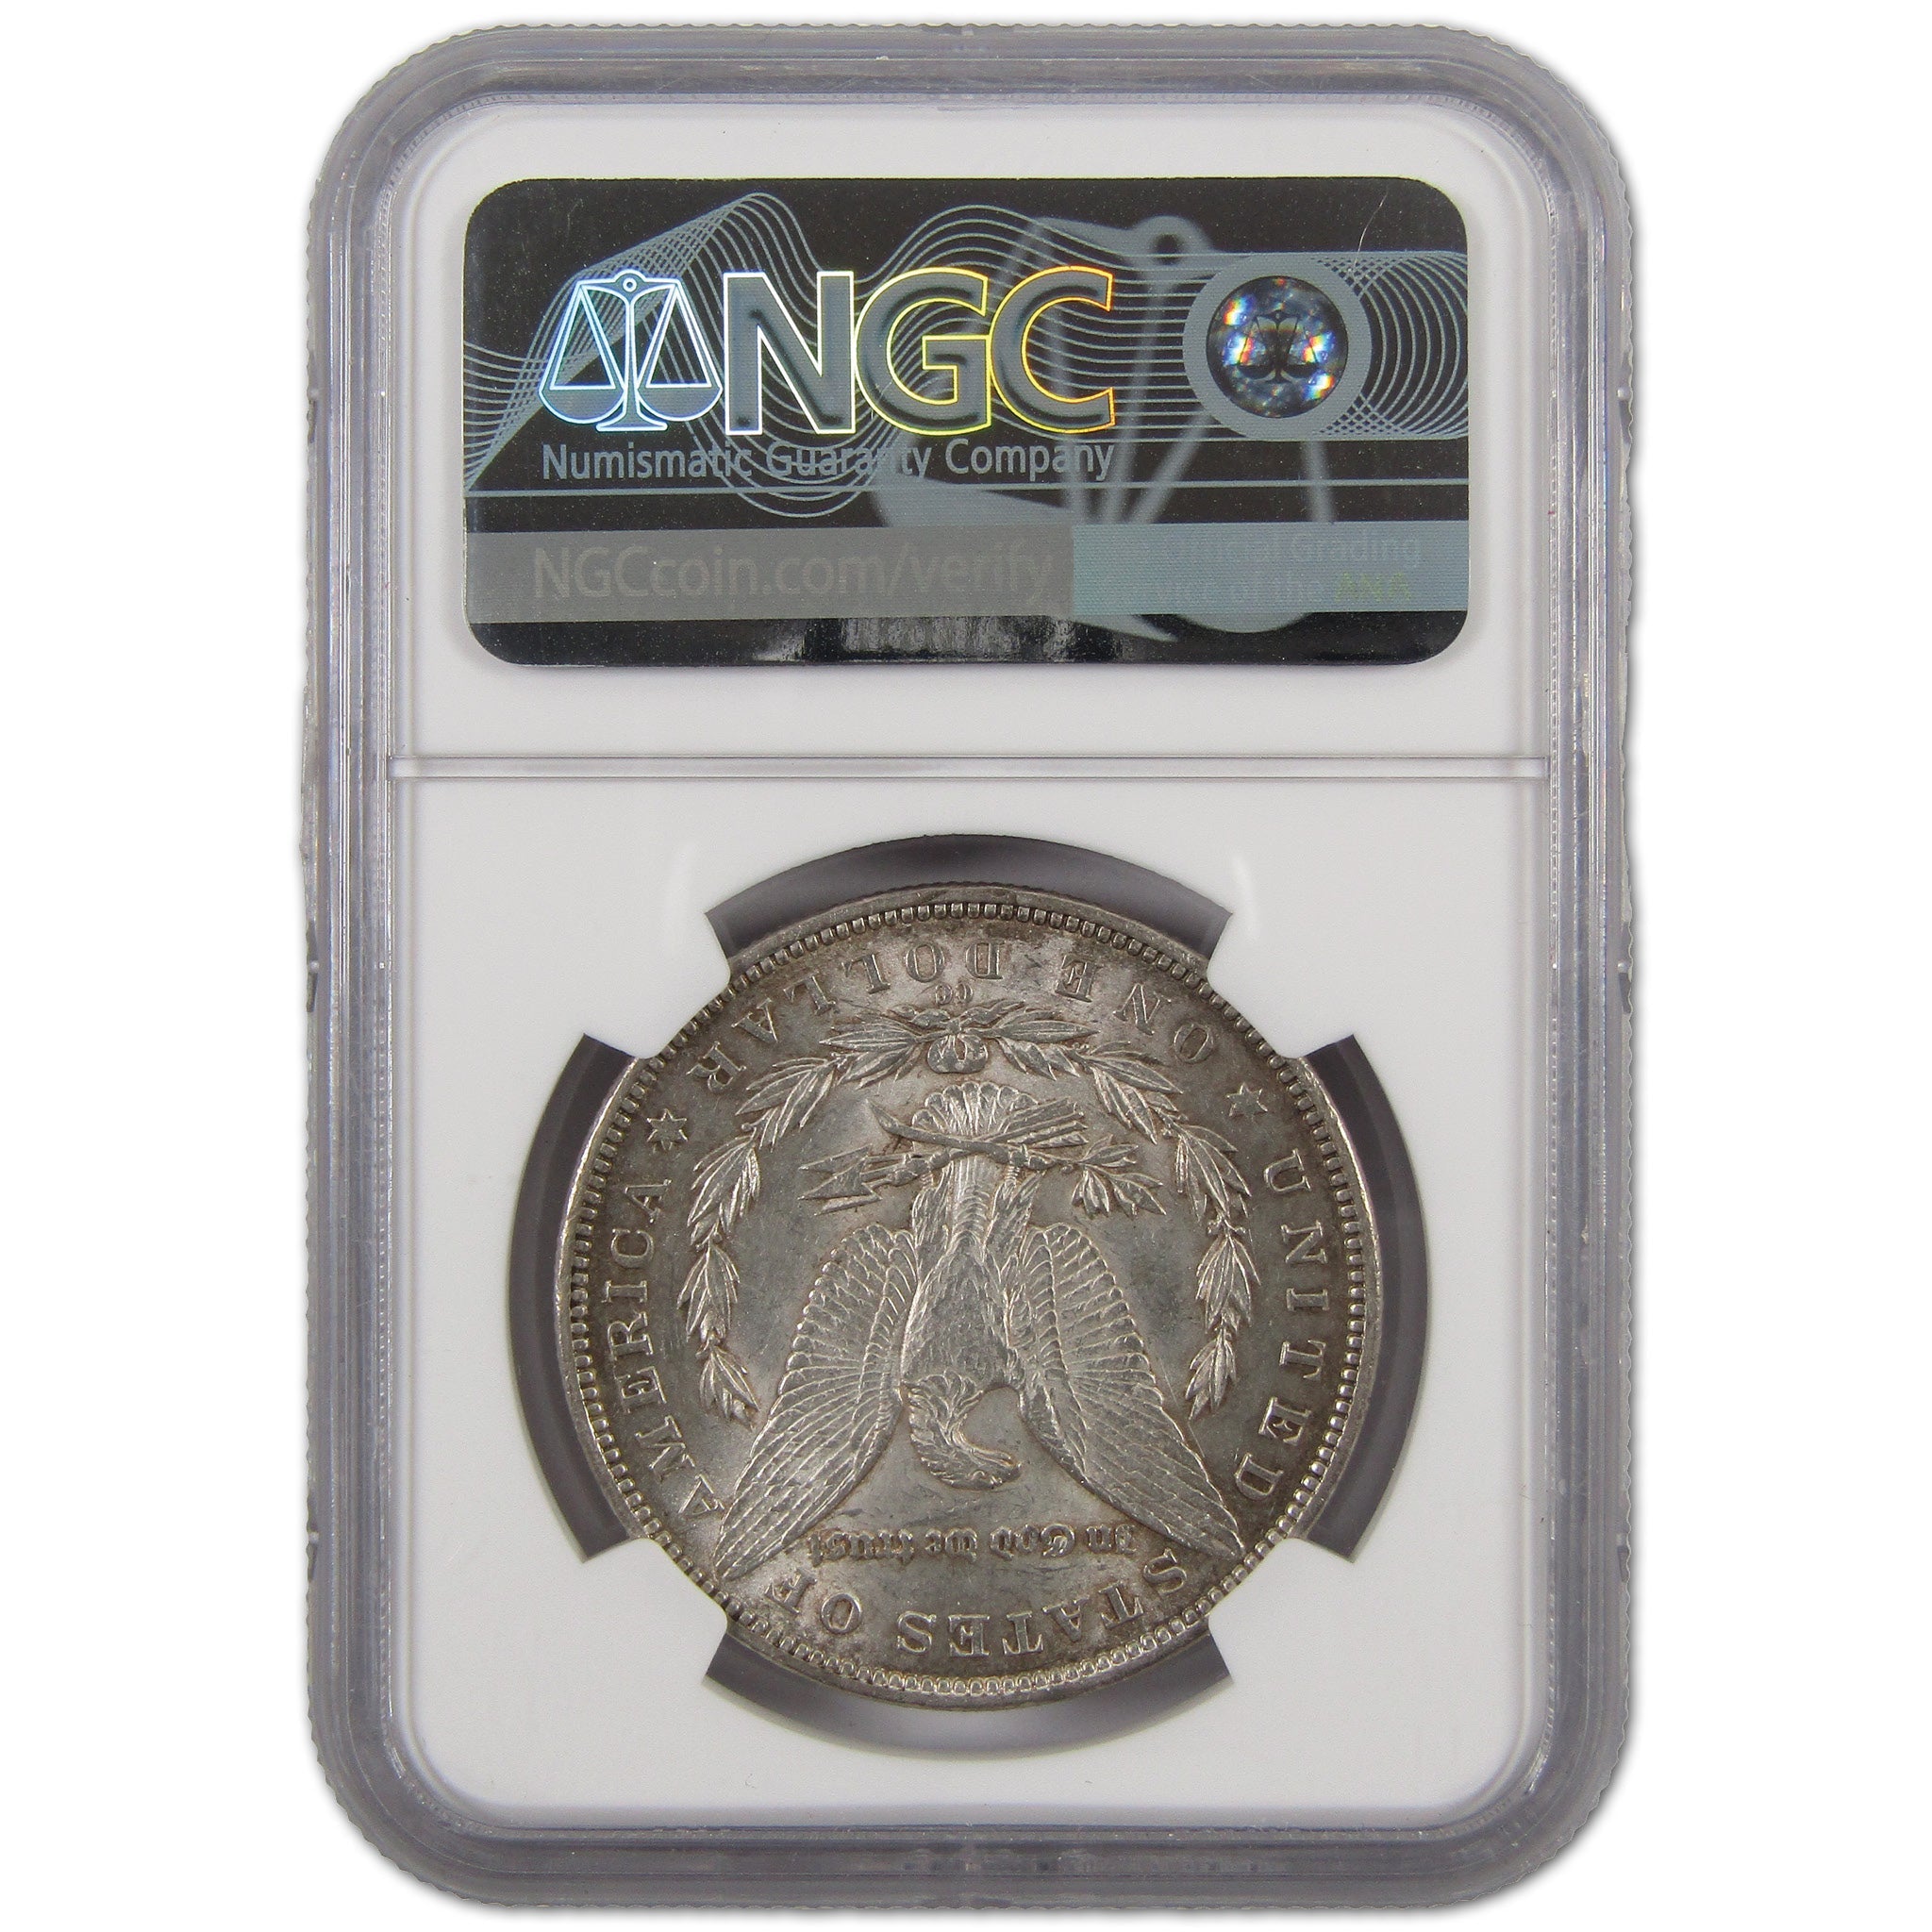 1891 CC Morgan Dollar AU 58 NGC Silver $1 Coin SKU:I10923 - Morgan coin - Morgan silver dollar - Morgan silver dollar for sale - Profile Coins &amp; Collectibles